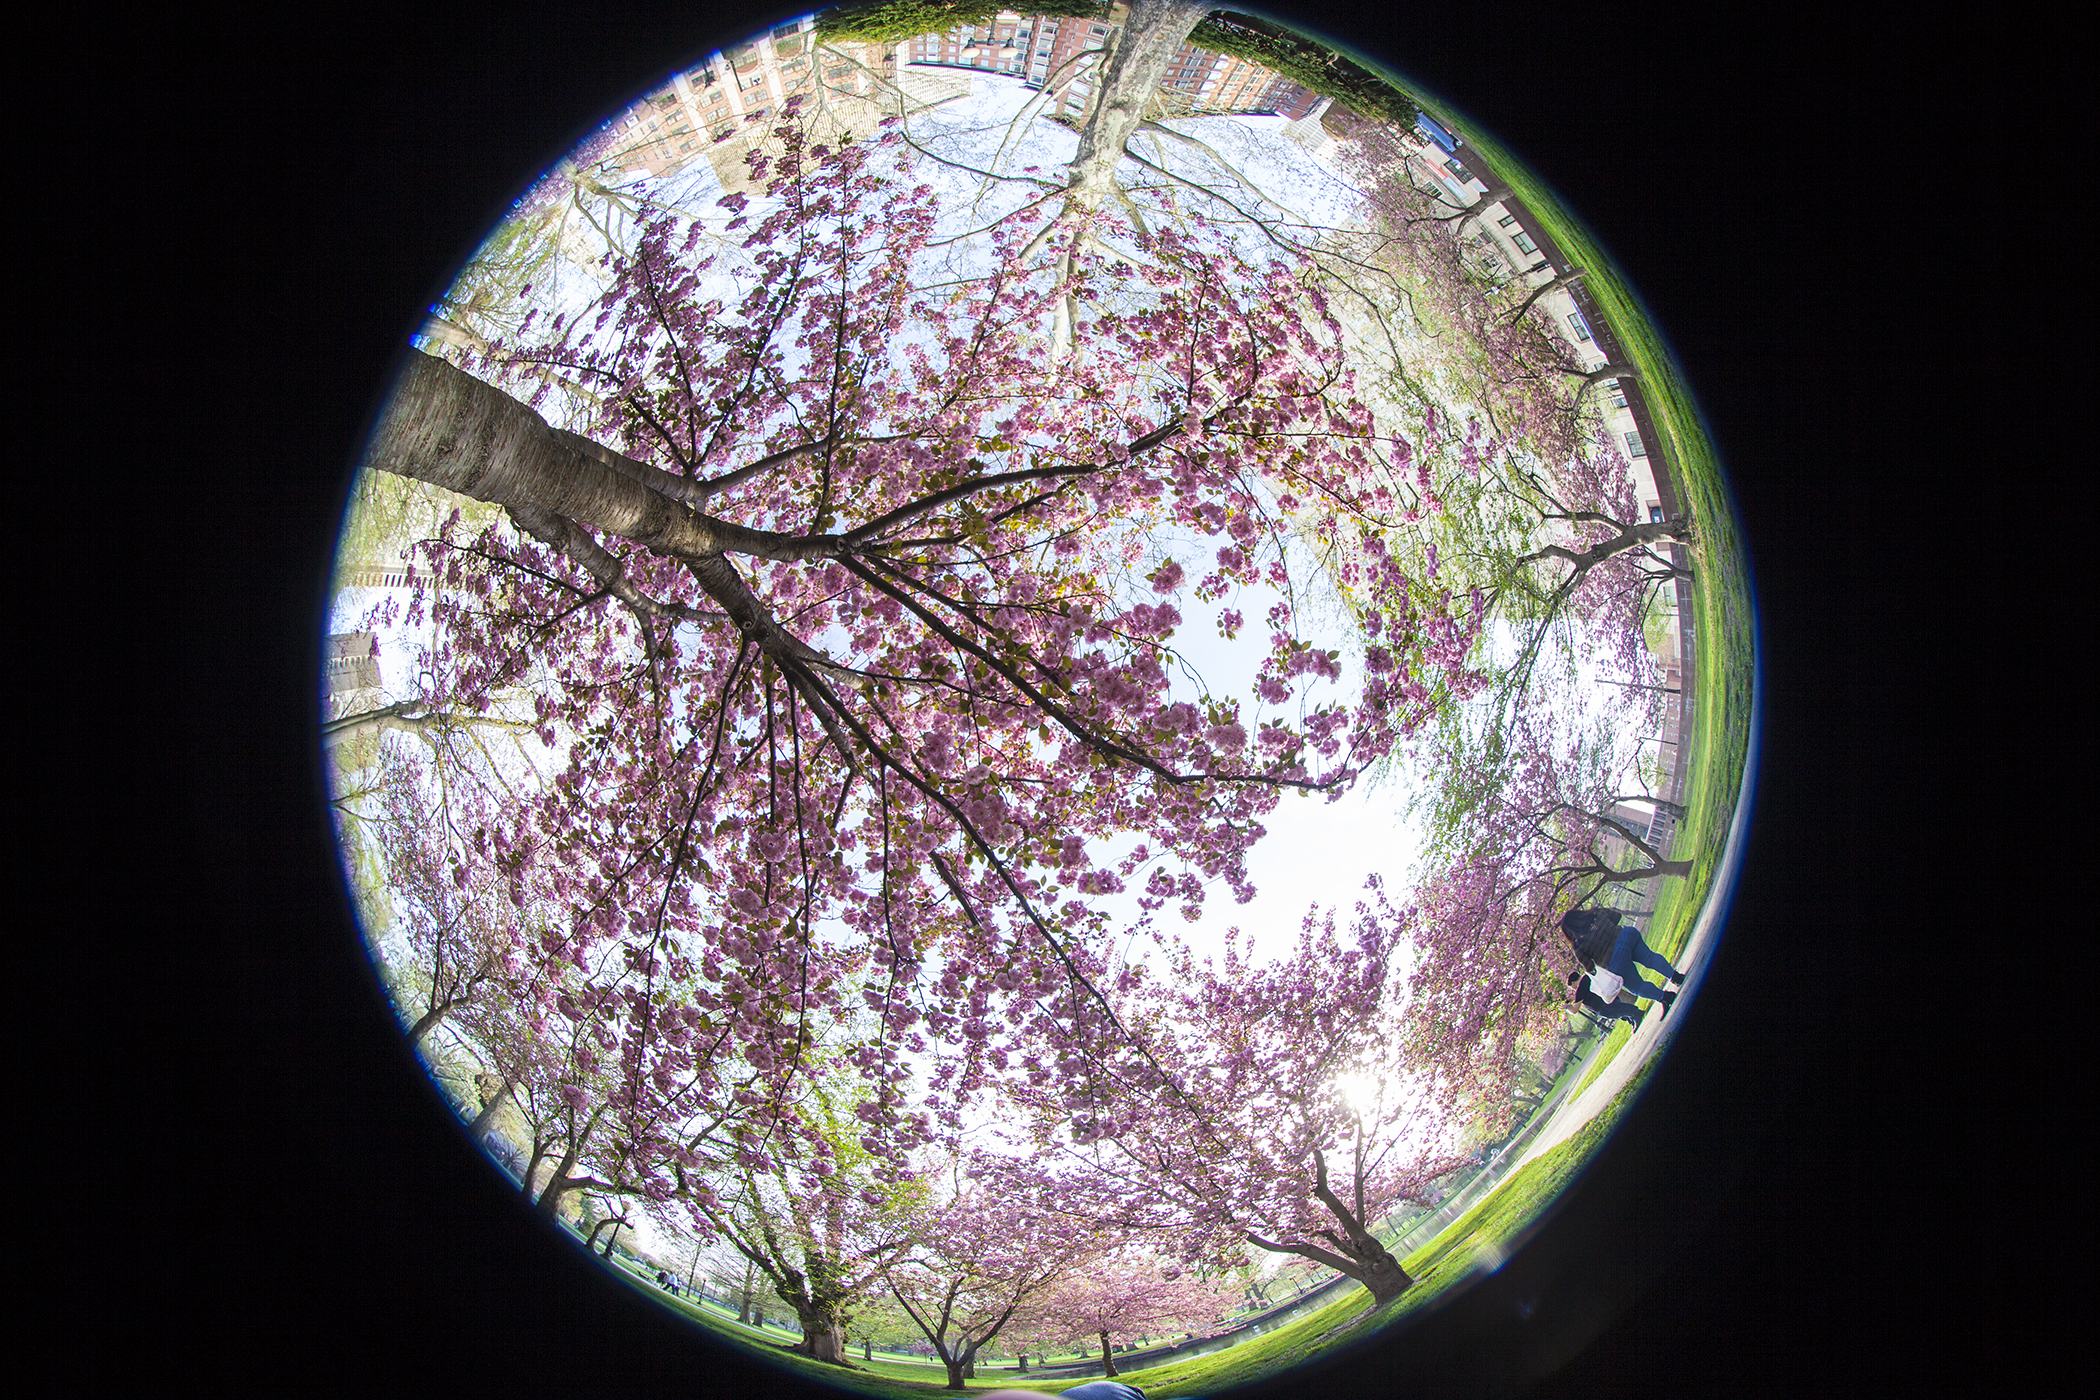 Spring Blossoms at Bushnell Park 5